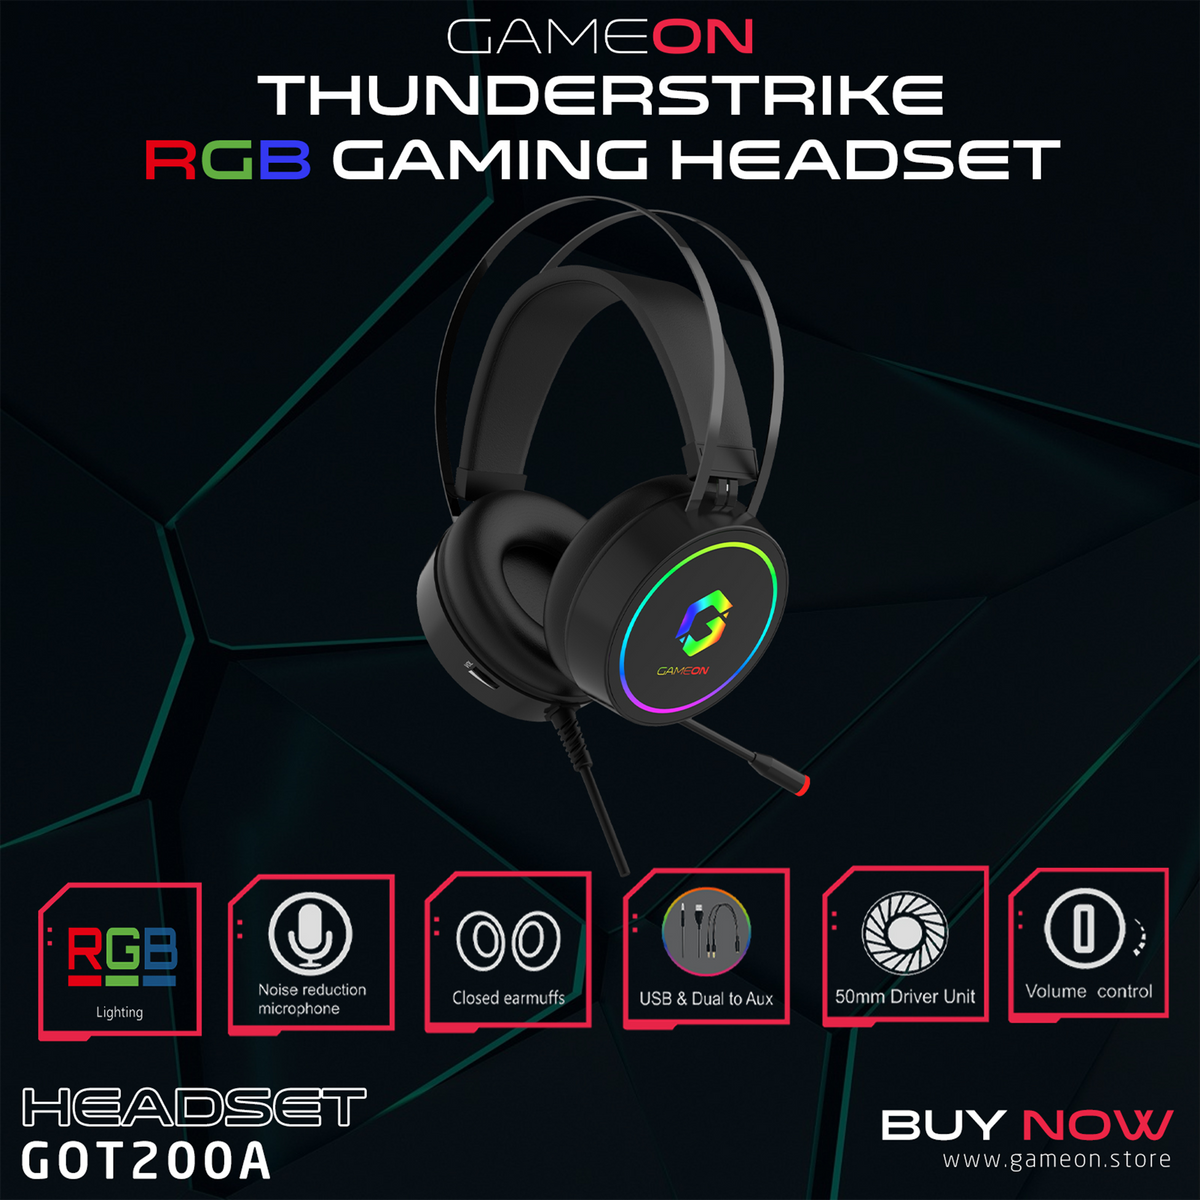 GAMEON GOT200A Thunderstrike RGB Gaming Headset - Black